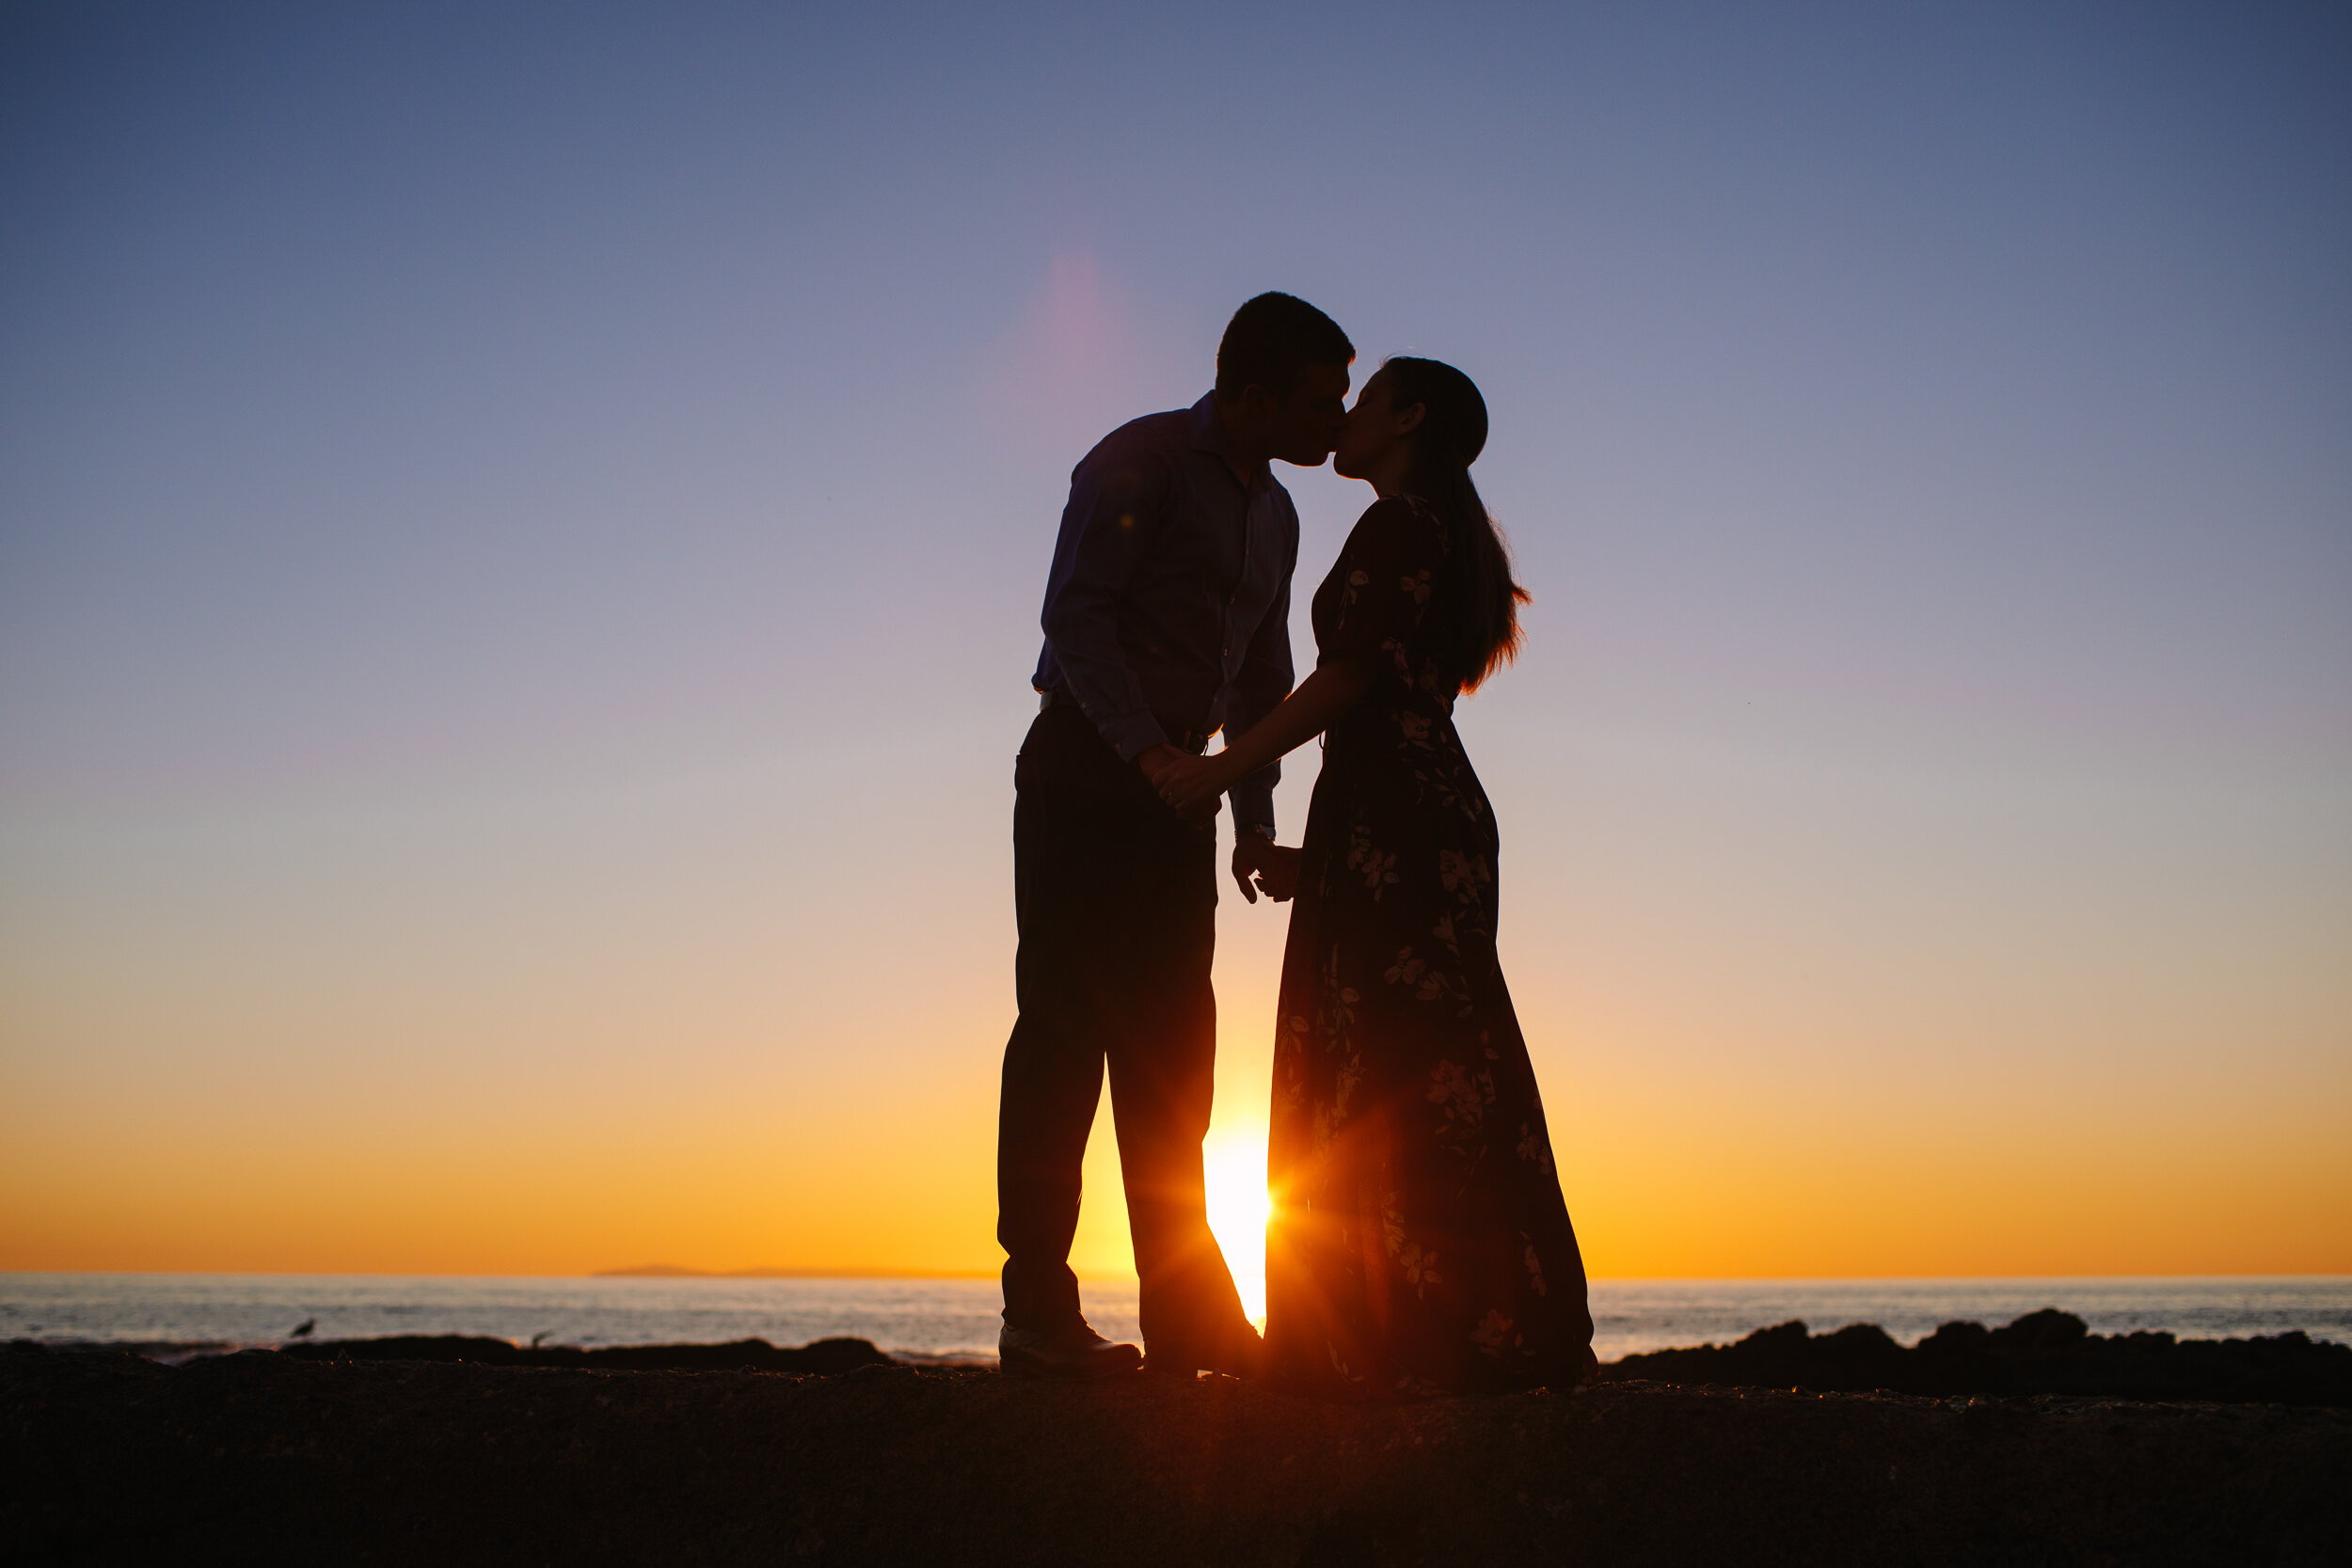 RebeccaandTyler_LagunaBeachEngagementSession-11 10 Tips for a Laguna Beach Engagement Session at Victoria Beach Pirate's Tower | Adventure Wedding Photographer